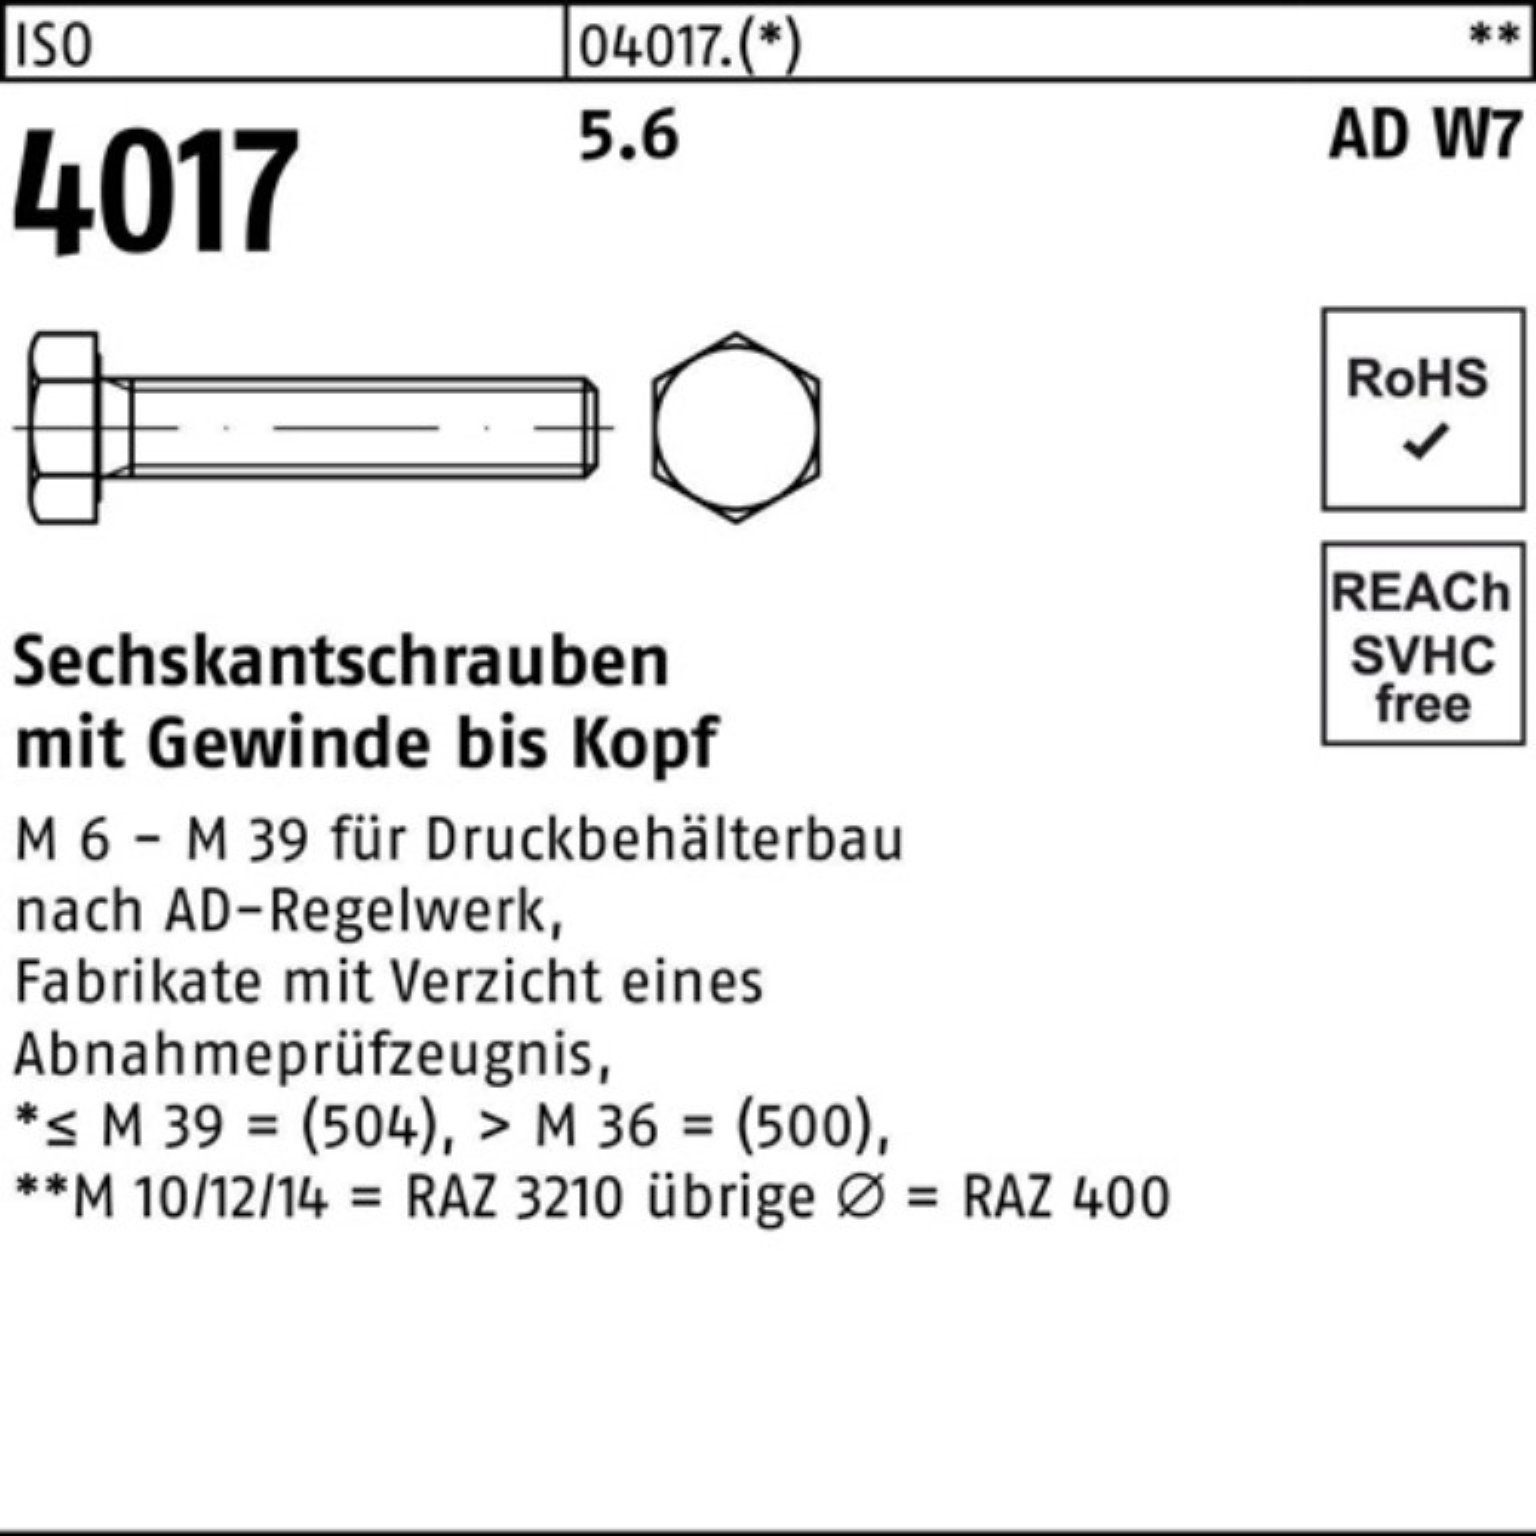 W7 VG 100er 1 Stück 150 AD I Sechskantschraube Sechskantschraube ISO M30x Bufab Pack 4017 5.6